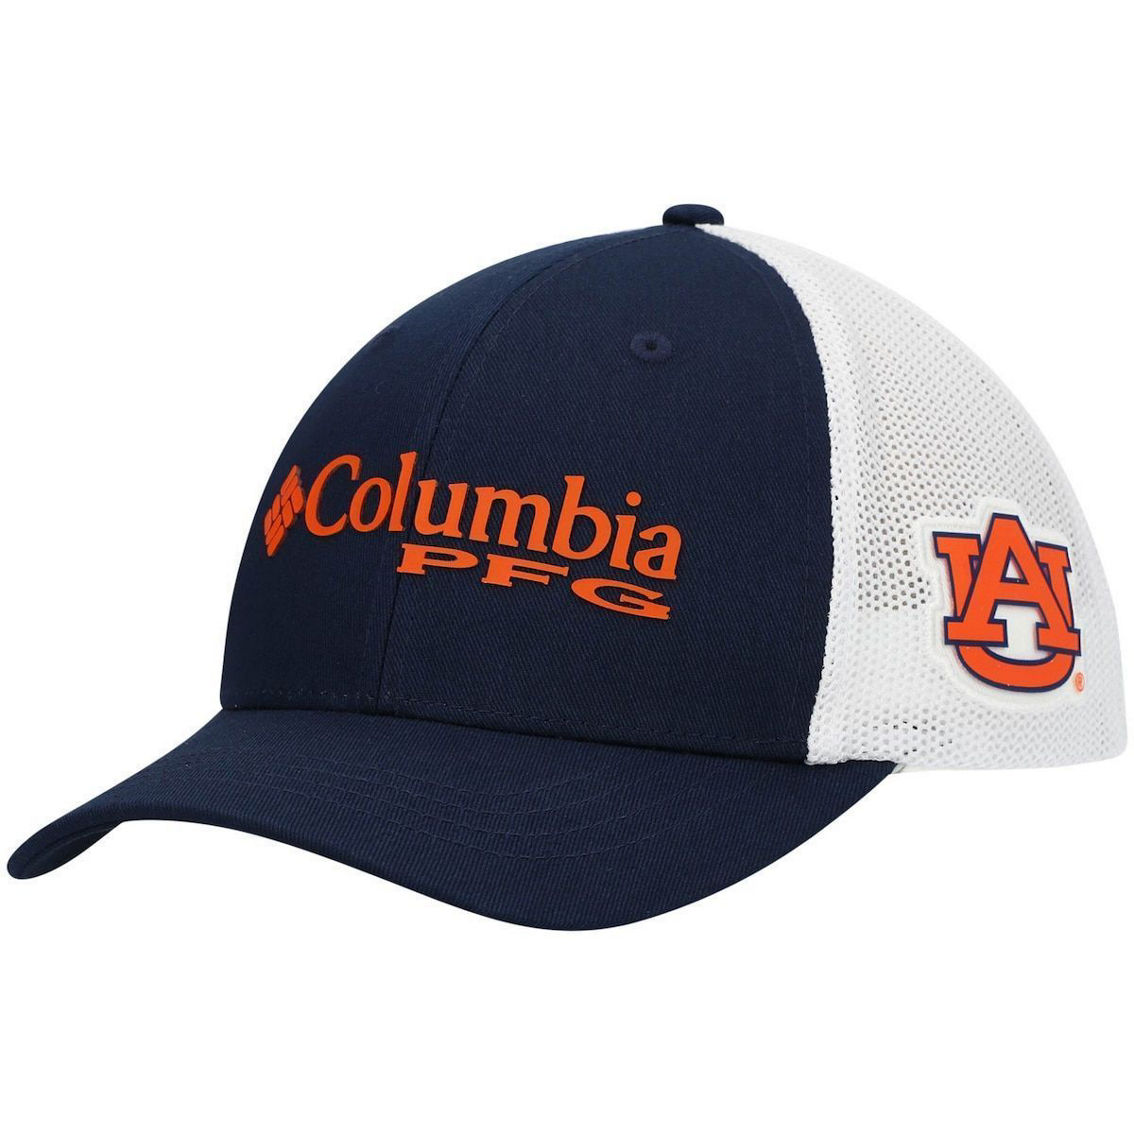 Youth Columbia Navy Auburn Tigers Collegiate PFG Snapback Hat - Image 2 of 4